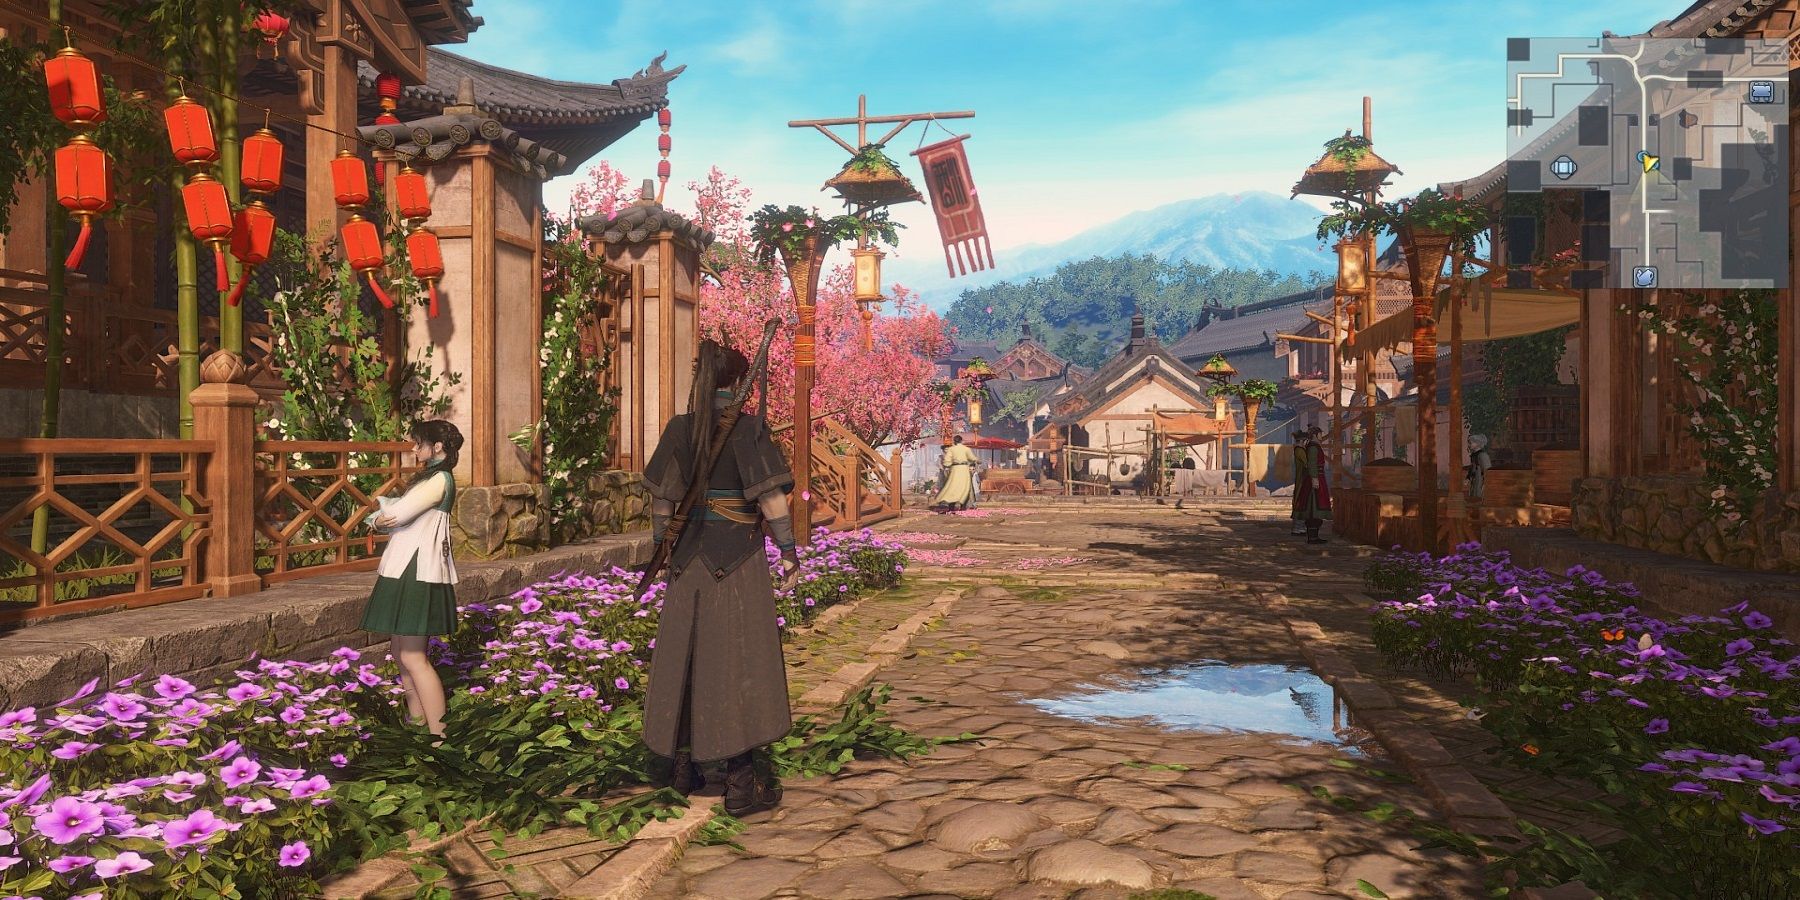 The protagonist of Gujian 3 exploring a city.